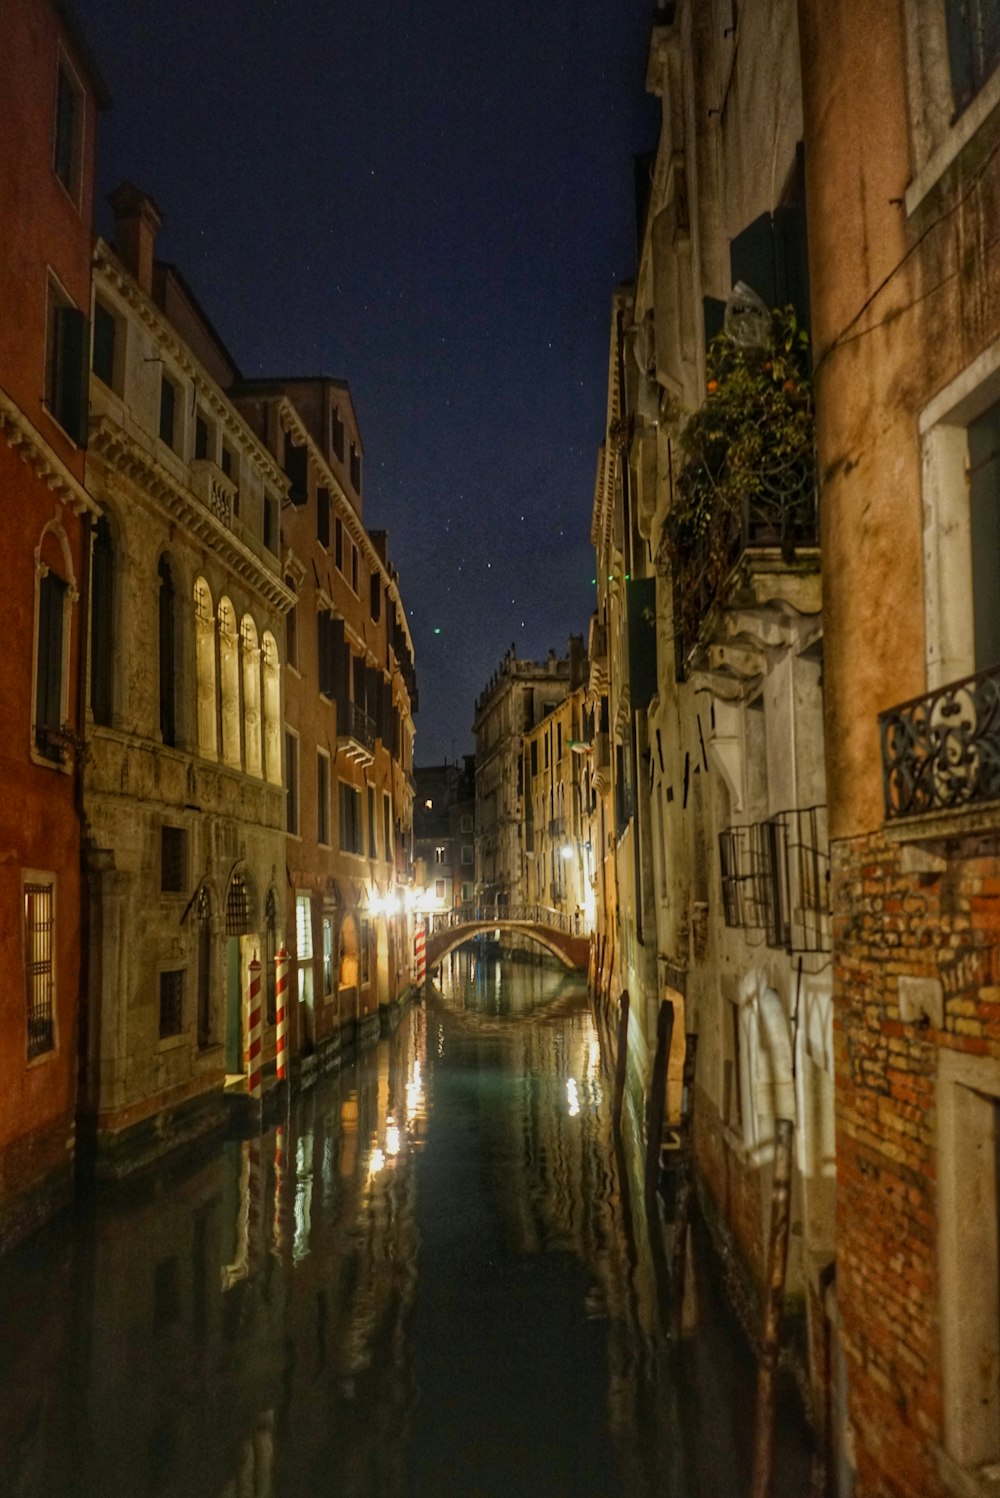 landscape photo of a Venice canal